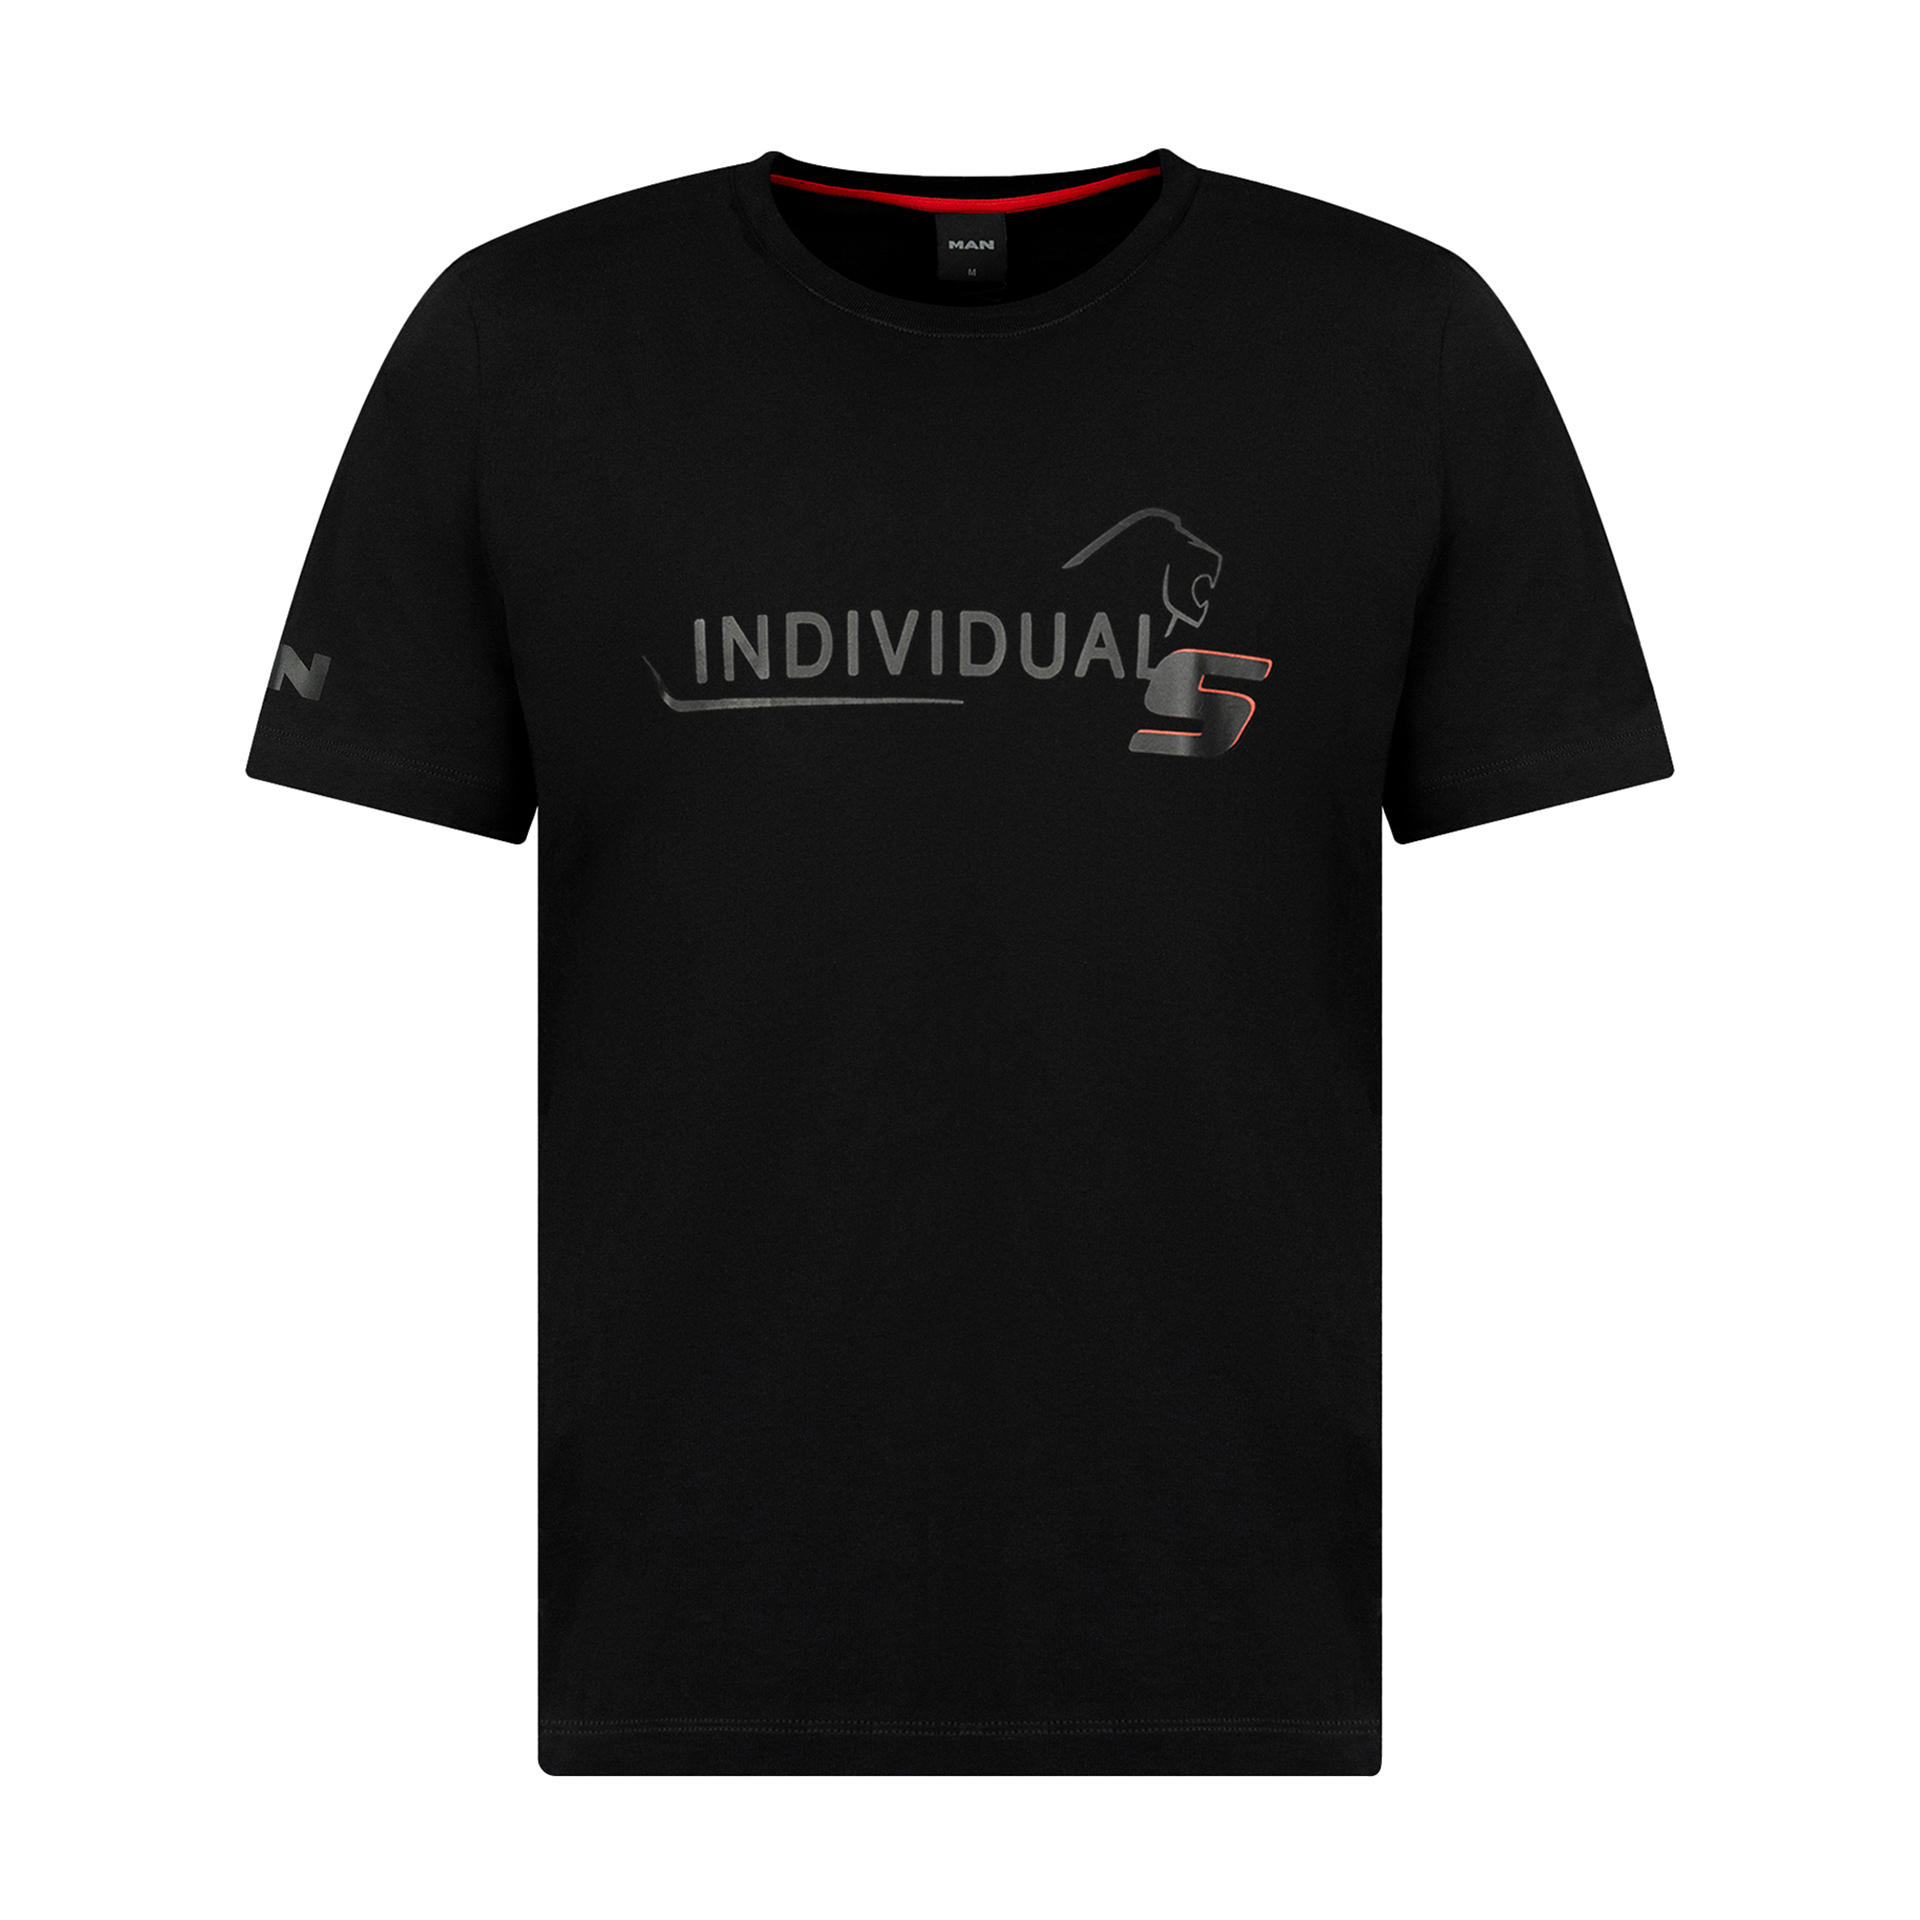 MAN Individual S Herren Premium T-Shirt  Black in Black